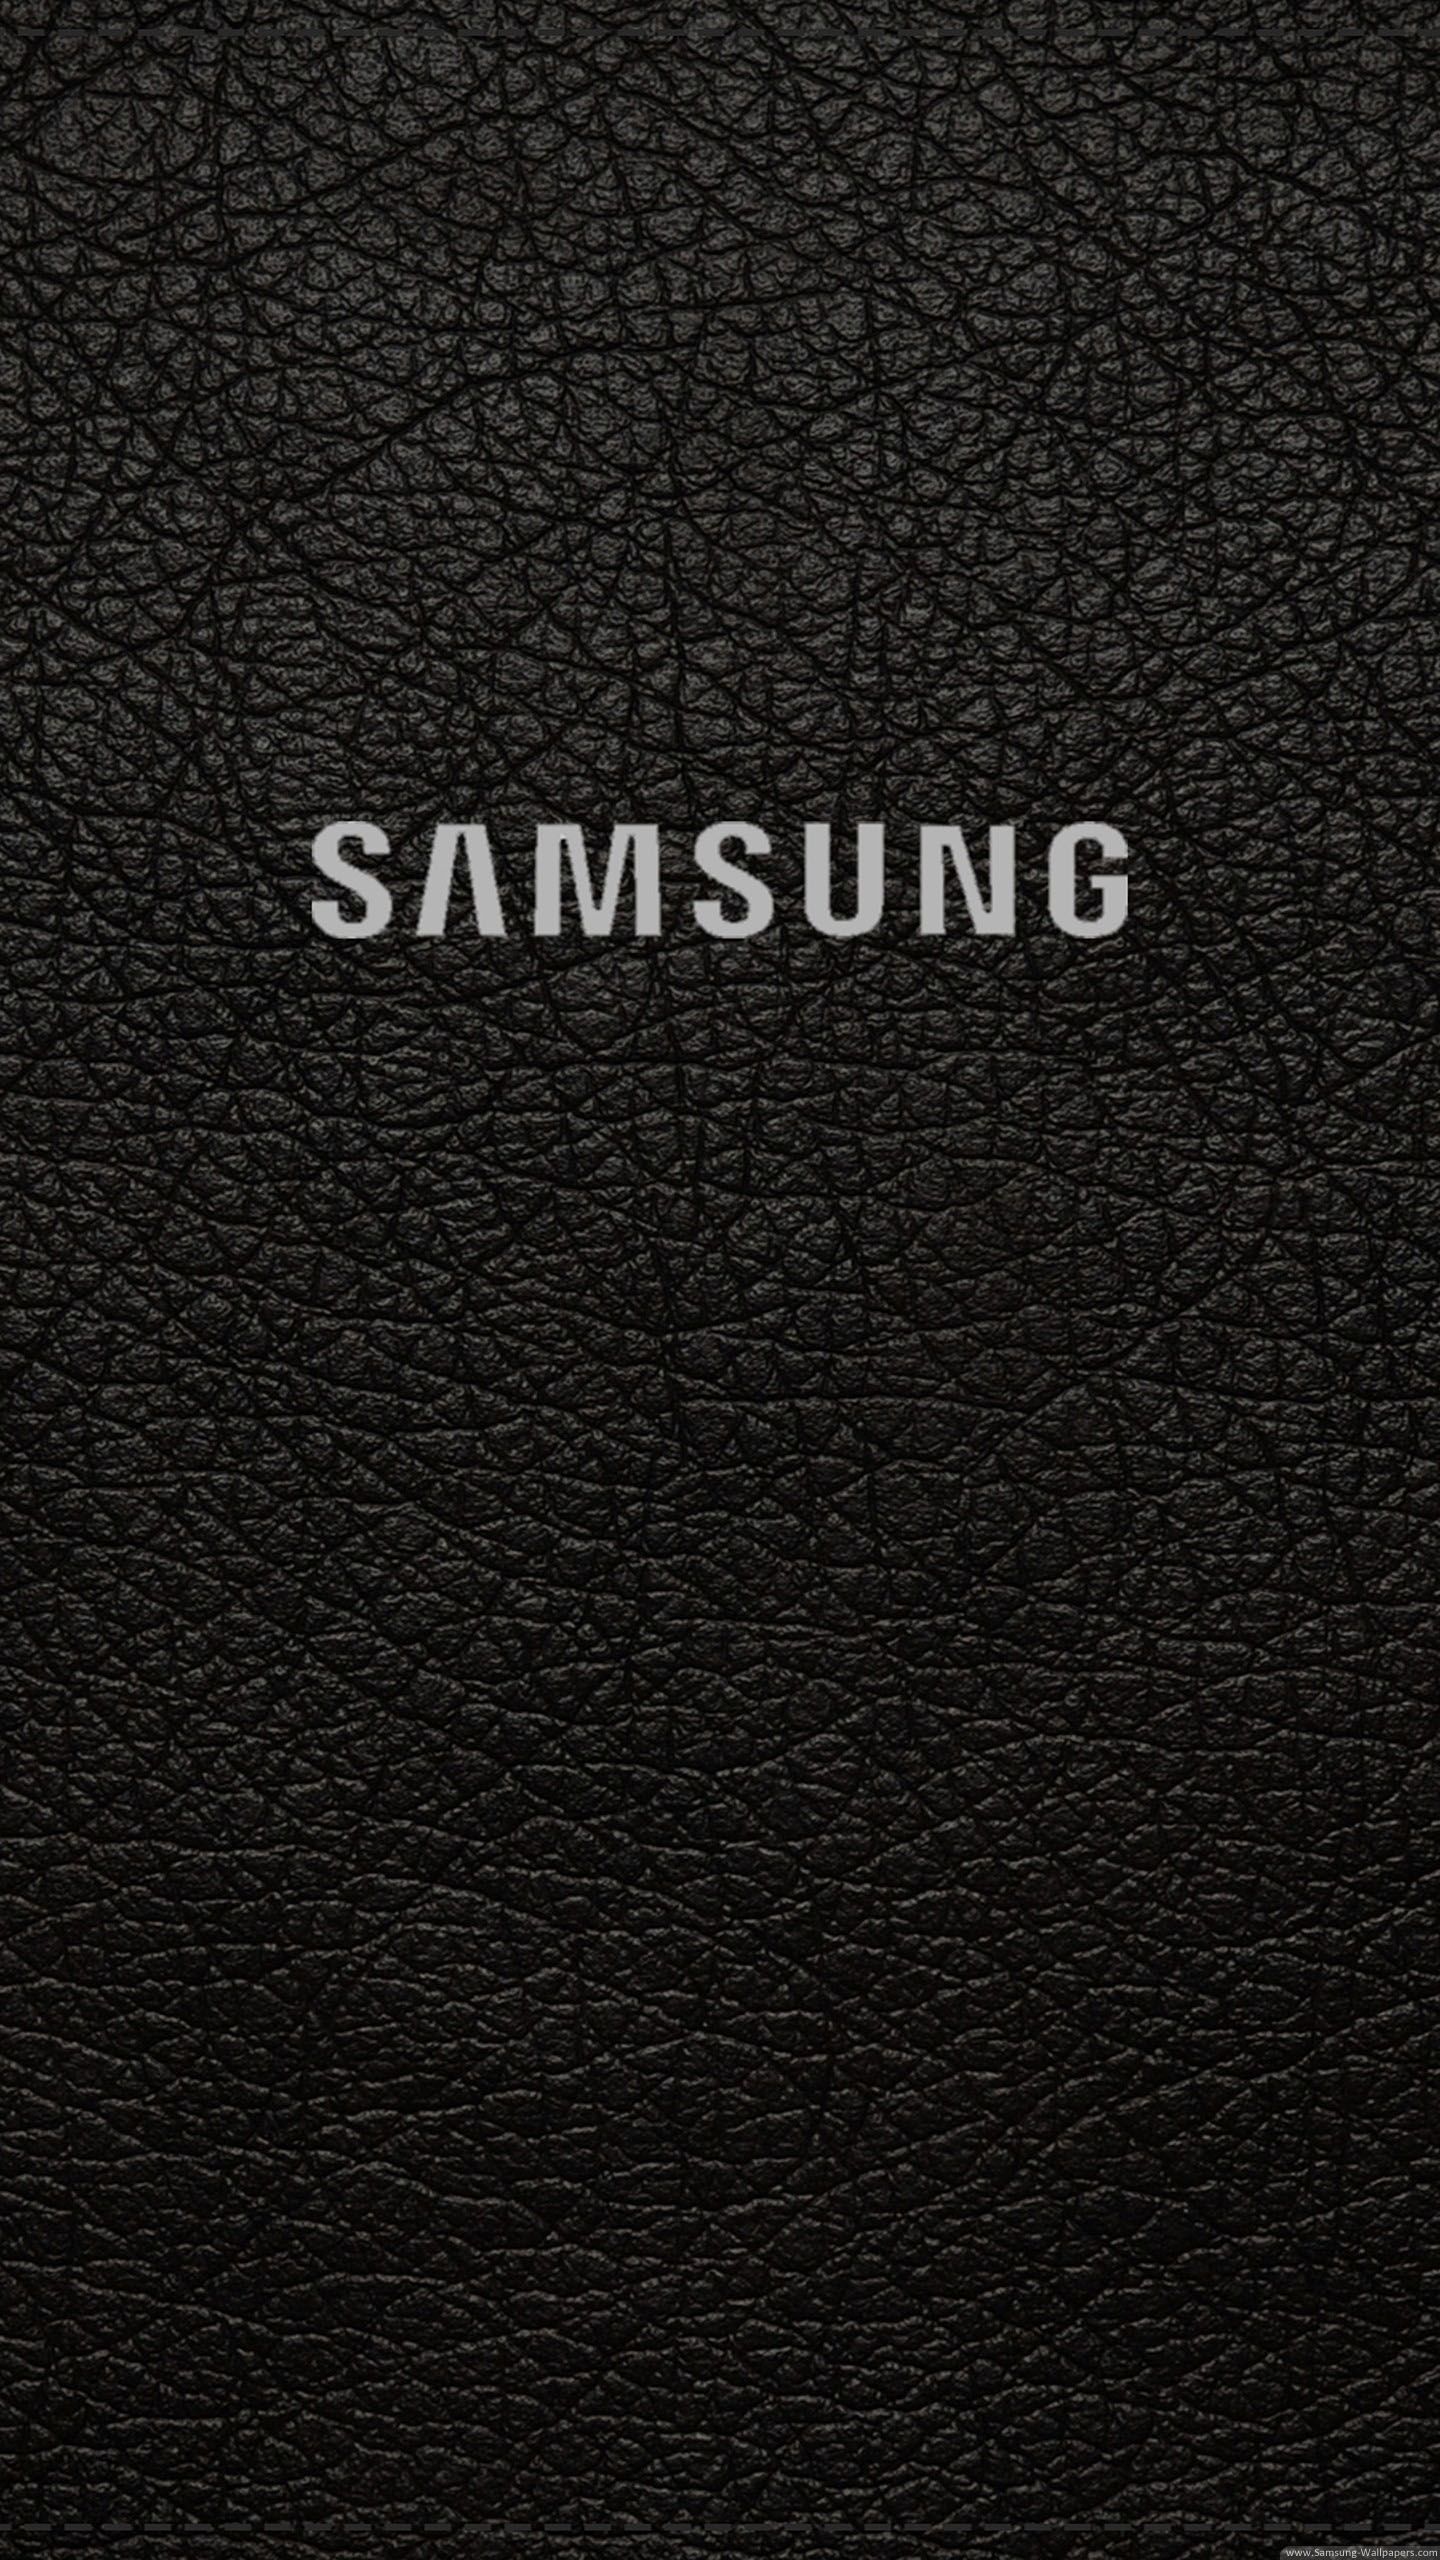 High Quality Samsung Wallpaper HD 4k